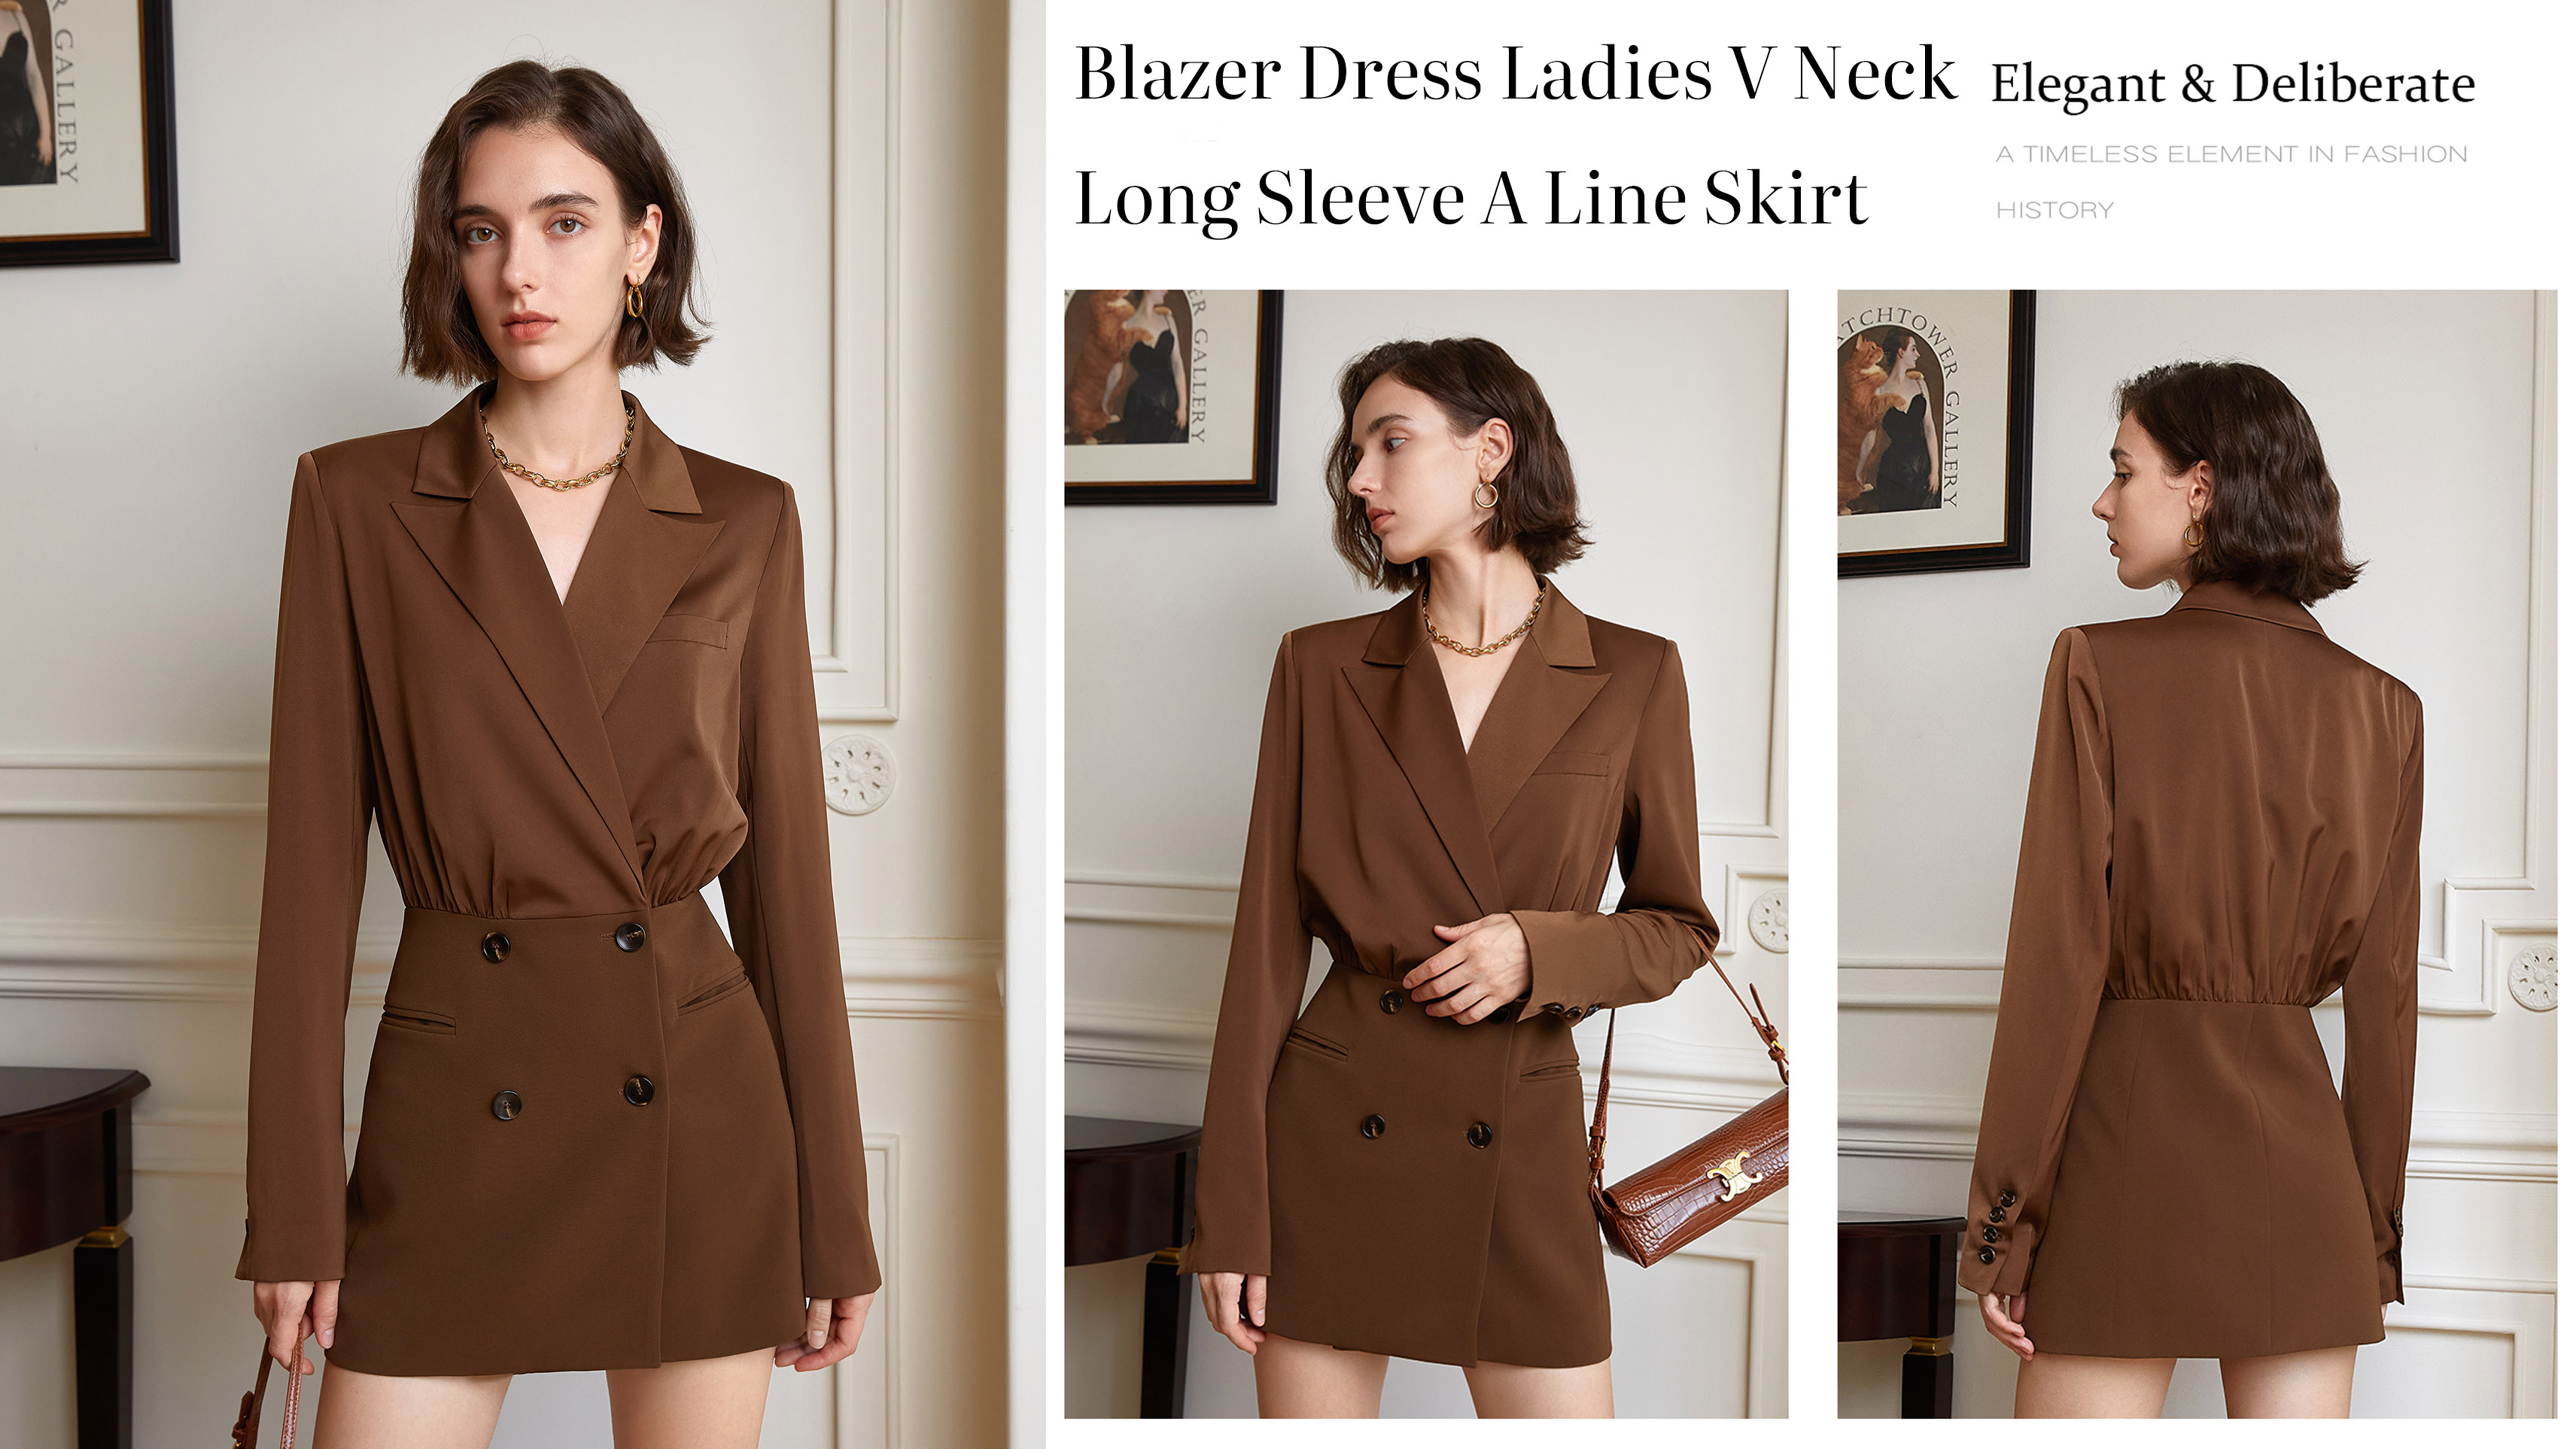 Quality Blazer Dress Ladies V Neck Long Sleeve A Line Skirt Manufacturer |Auschalink